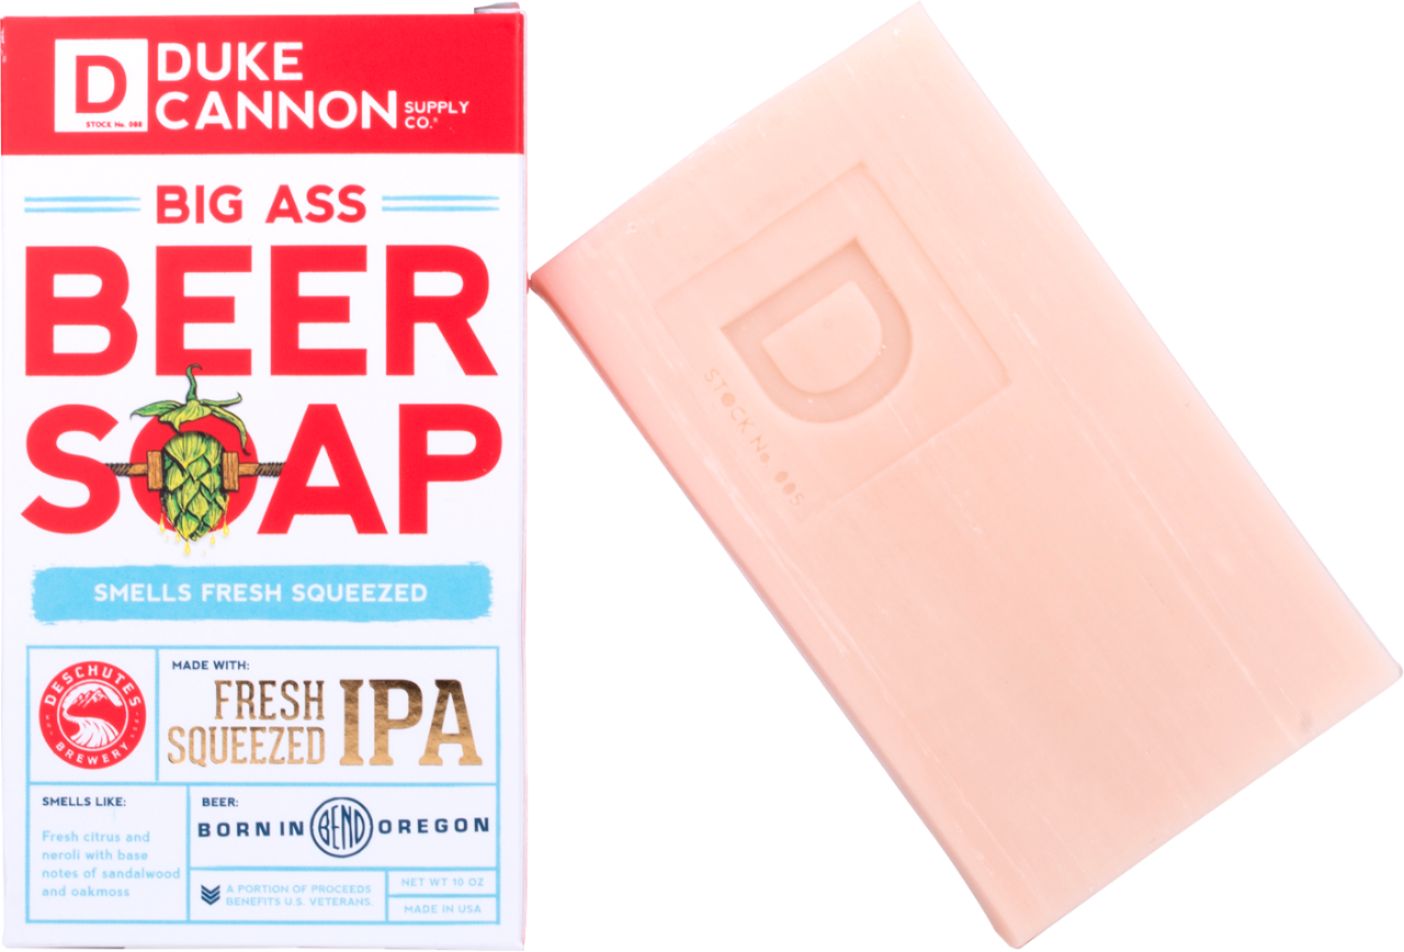 Duke Cannon - Big Ass Beer Deschutes Fresh Squeezed IPA Soap - Tan